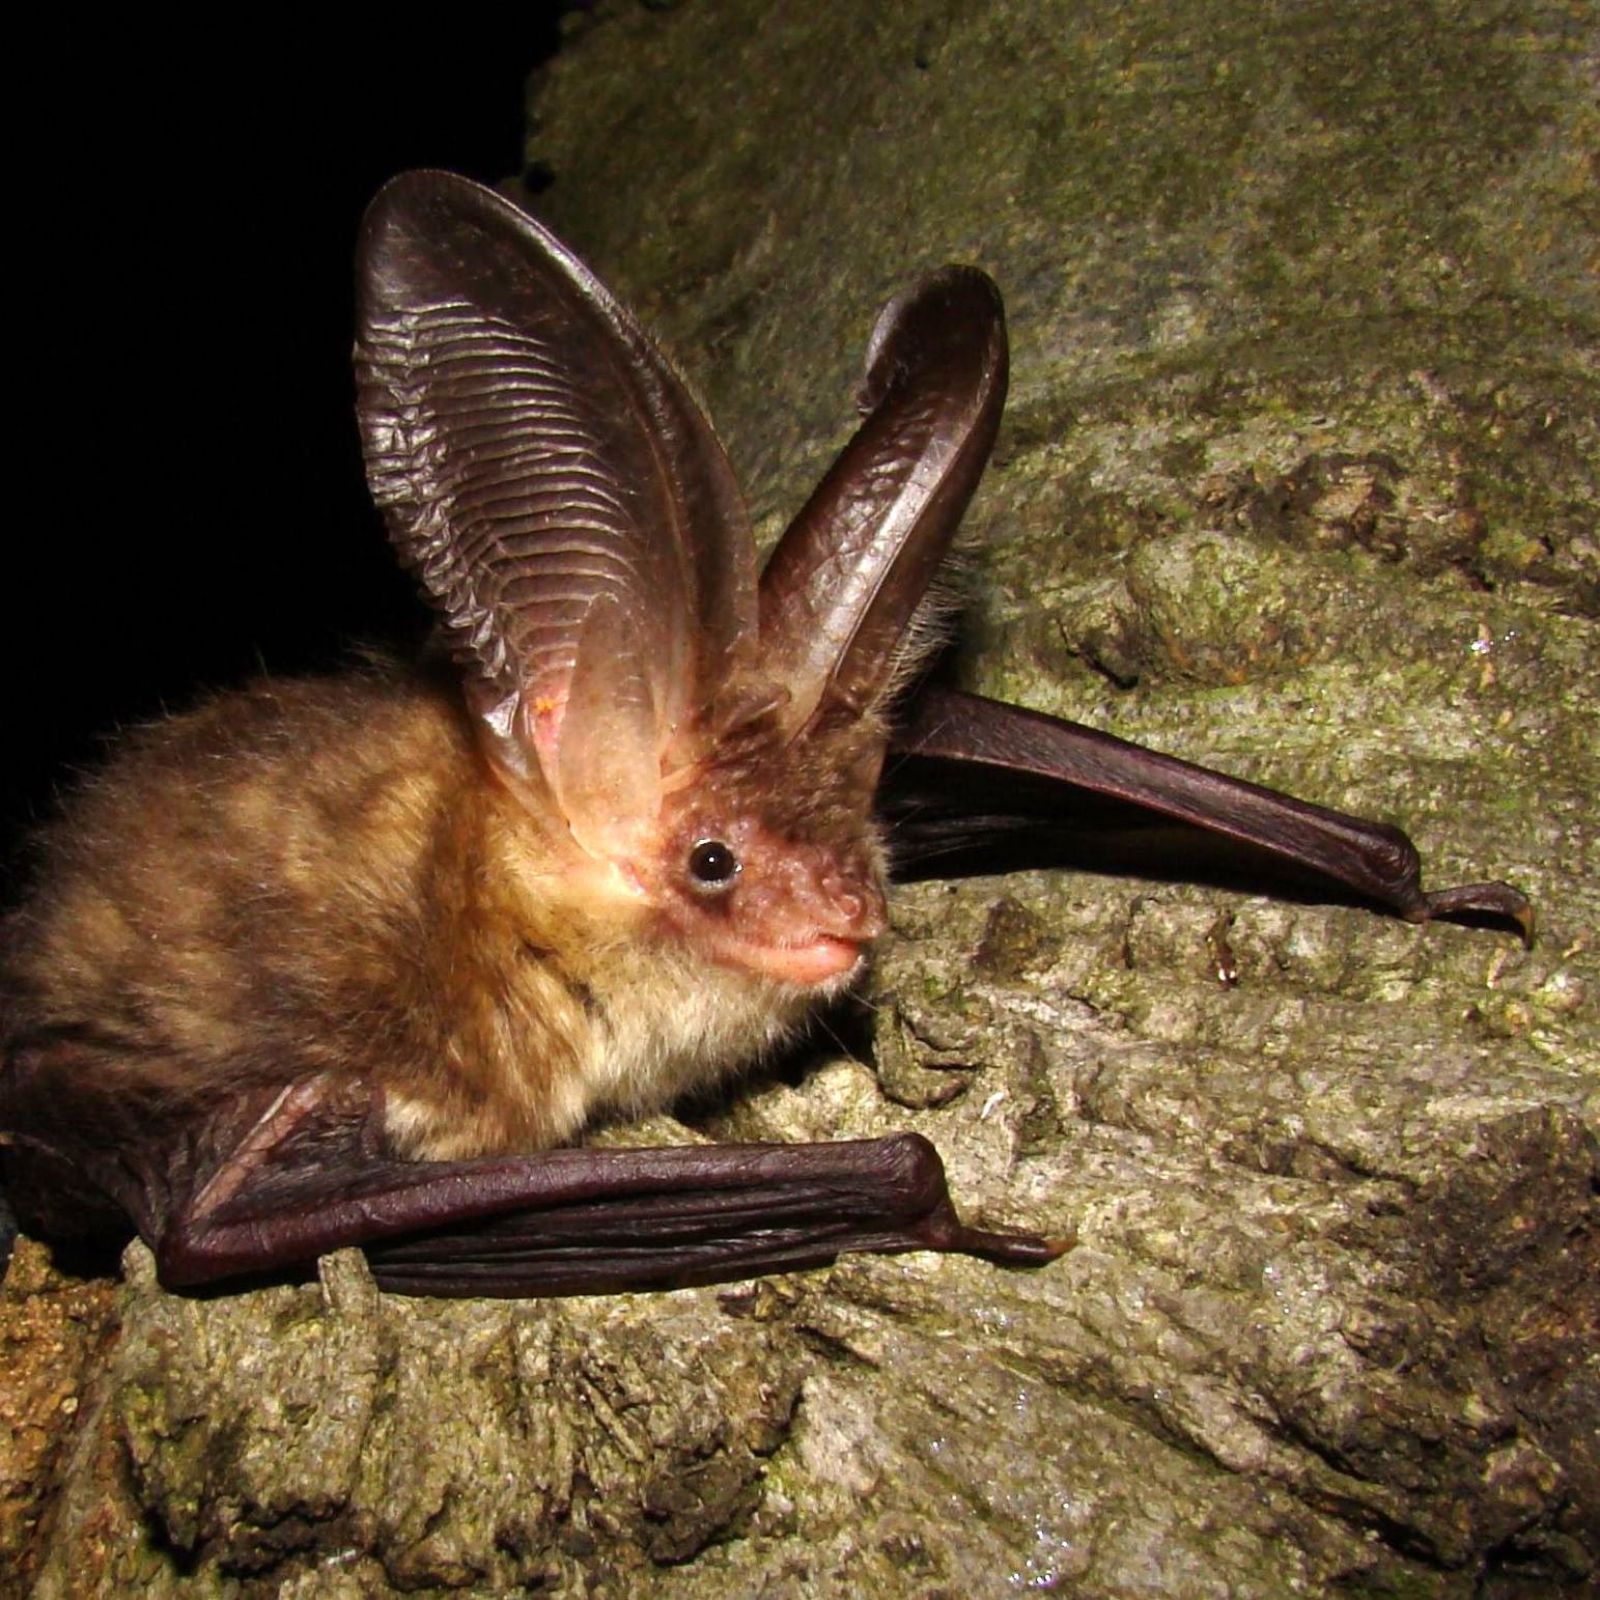 Horse shoe bat Plecous auritus